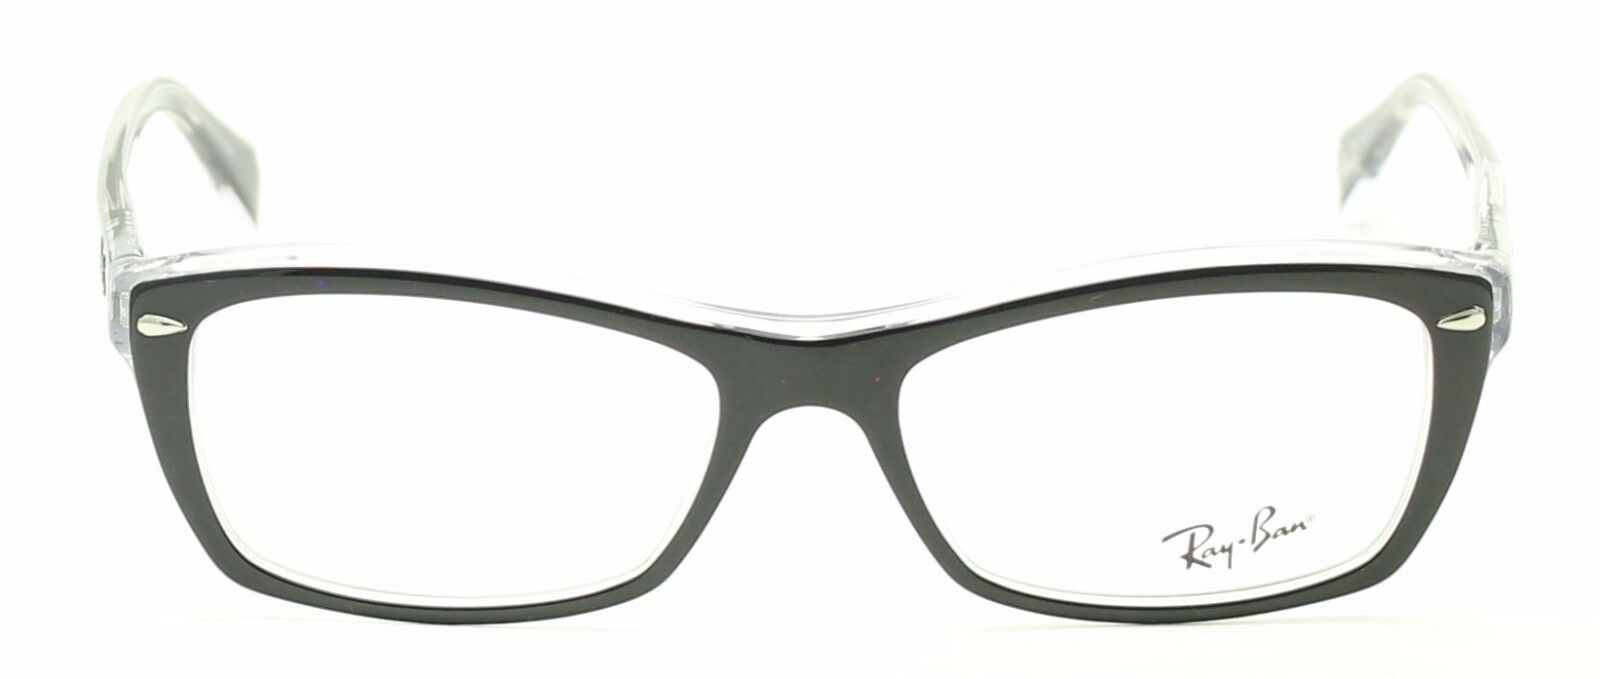 RAY BAN RB 5255 2034 53mm FRAMES RAYBAN Glasses RX Optical Eyewear Eyeglasses